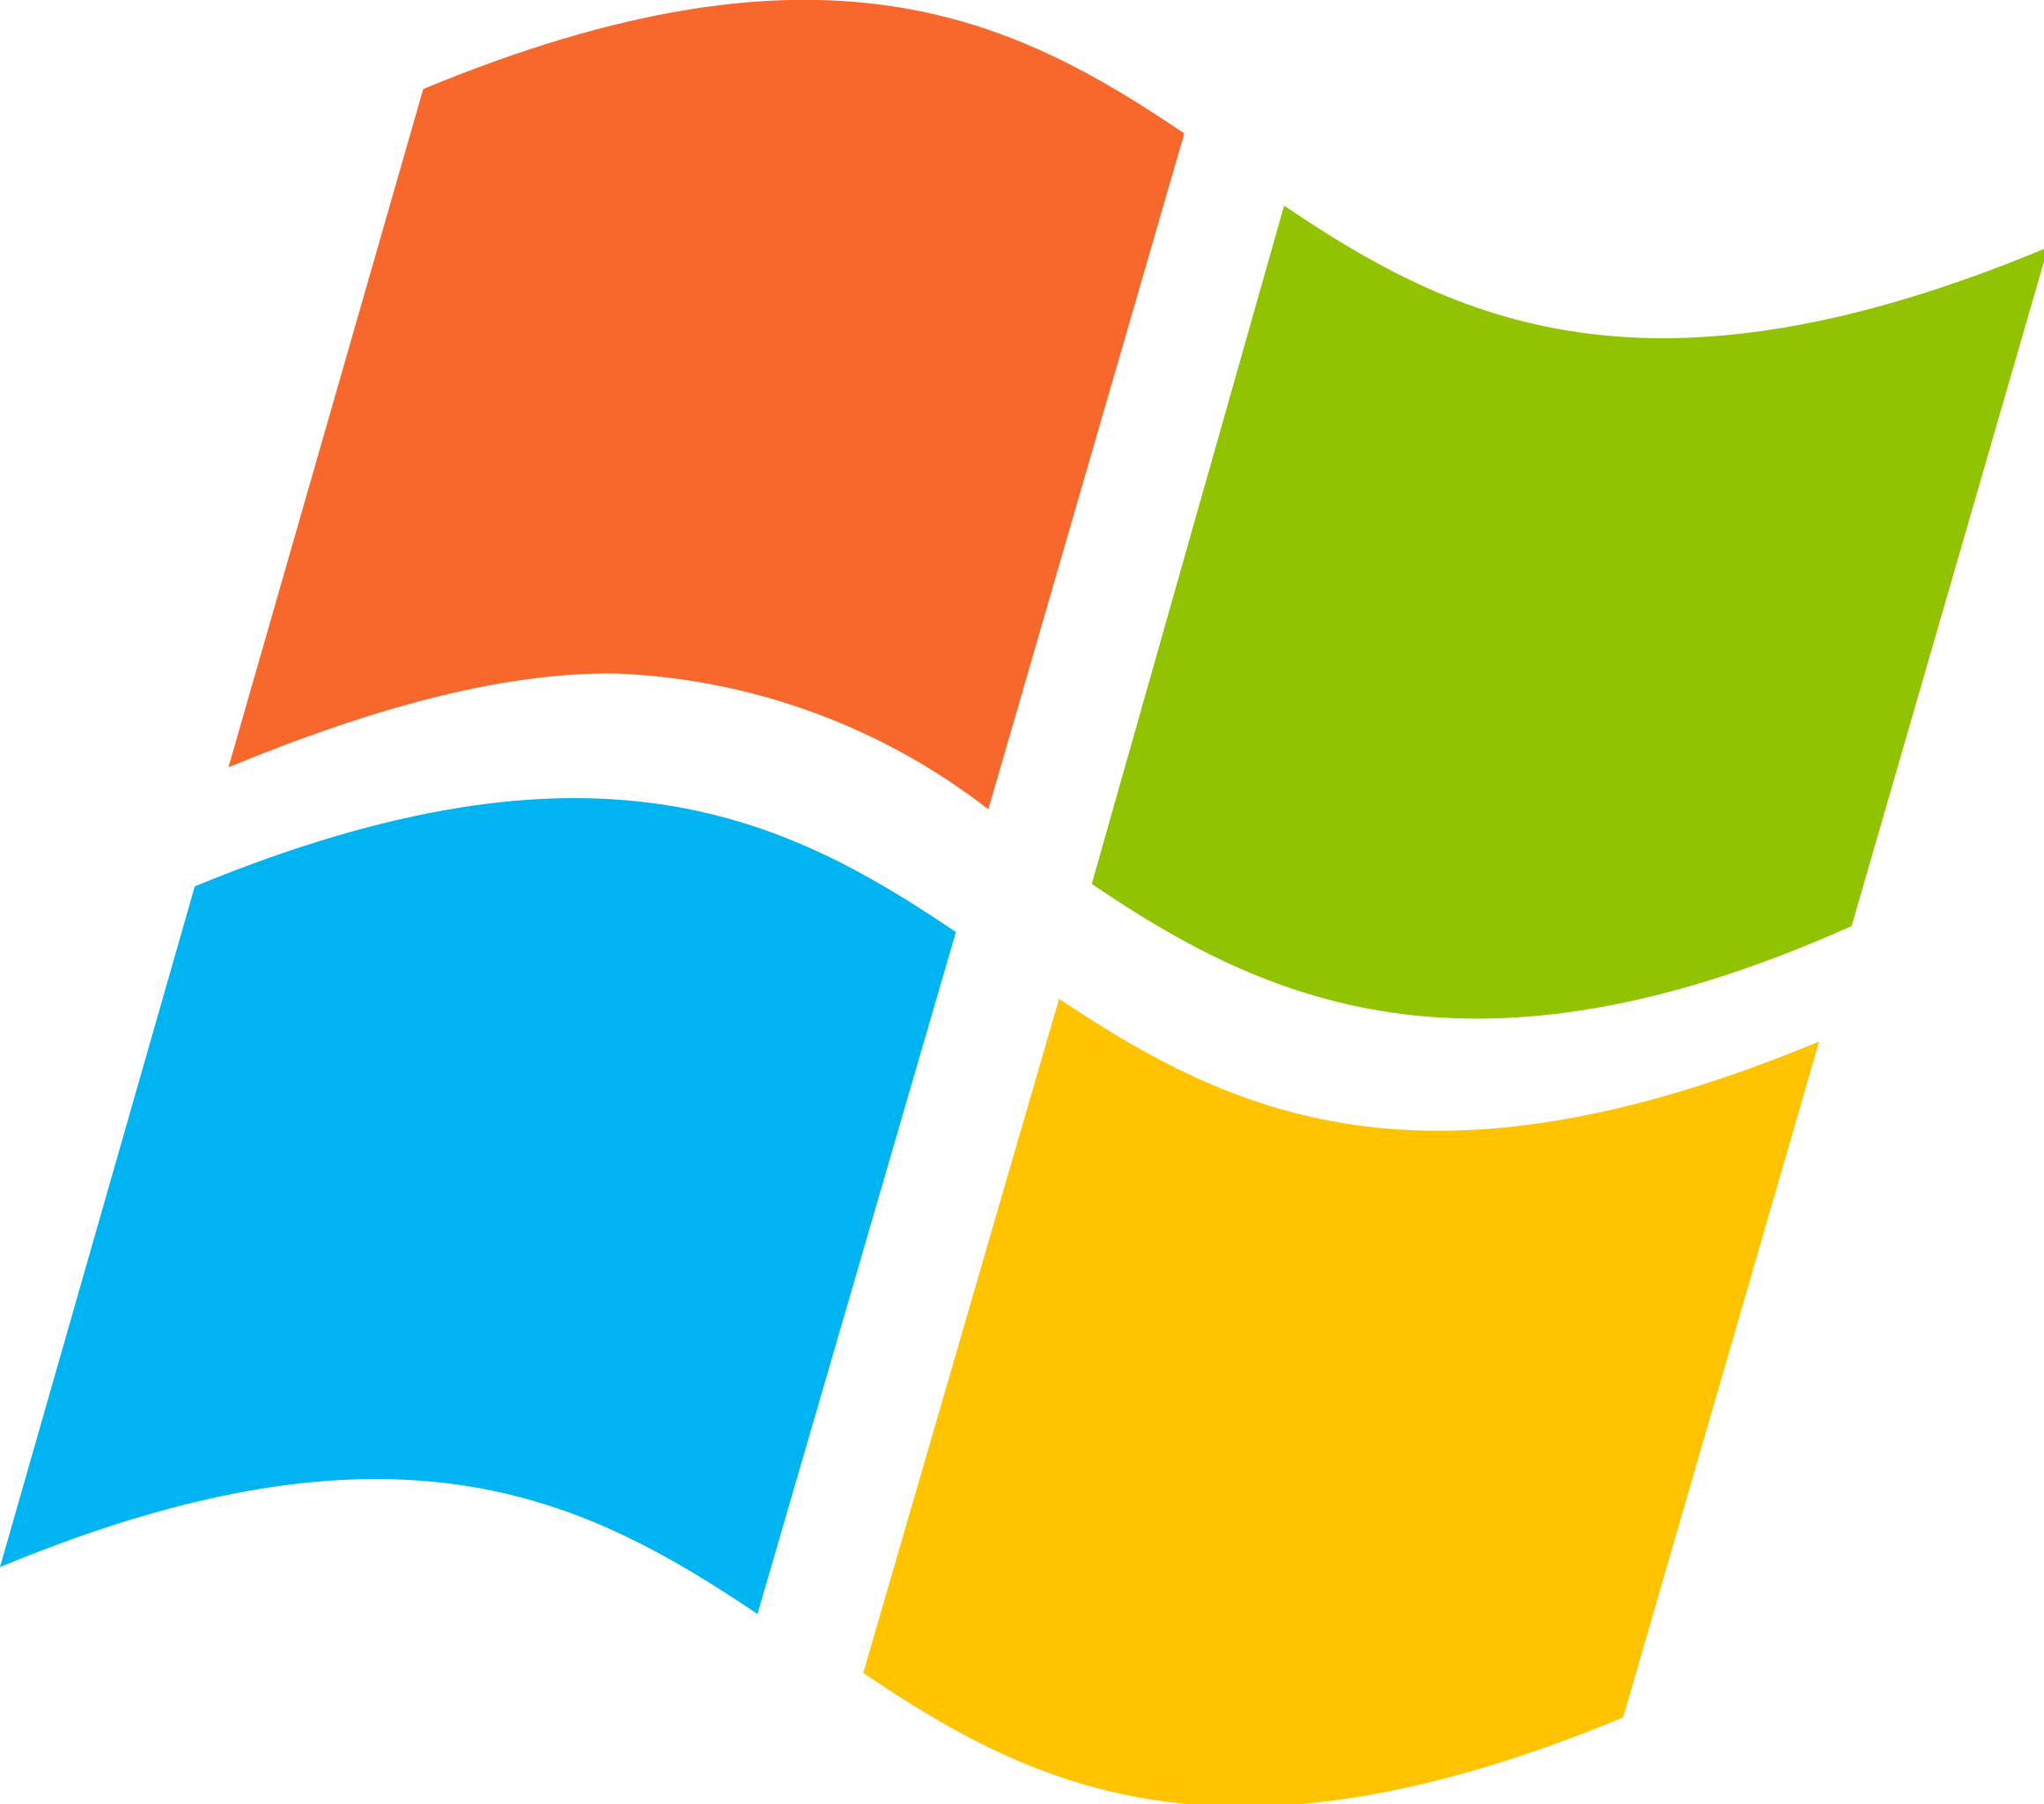 Windows Server 2019 Logo, HD Png Download - 901x901(#4412150) - PngFind